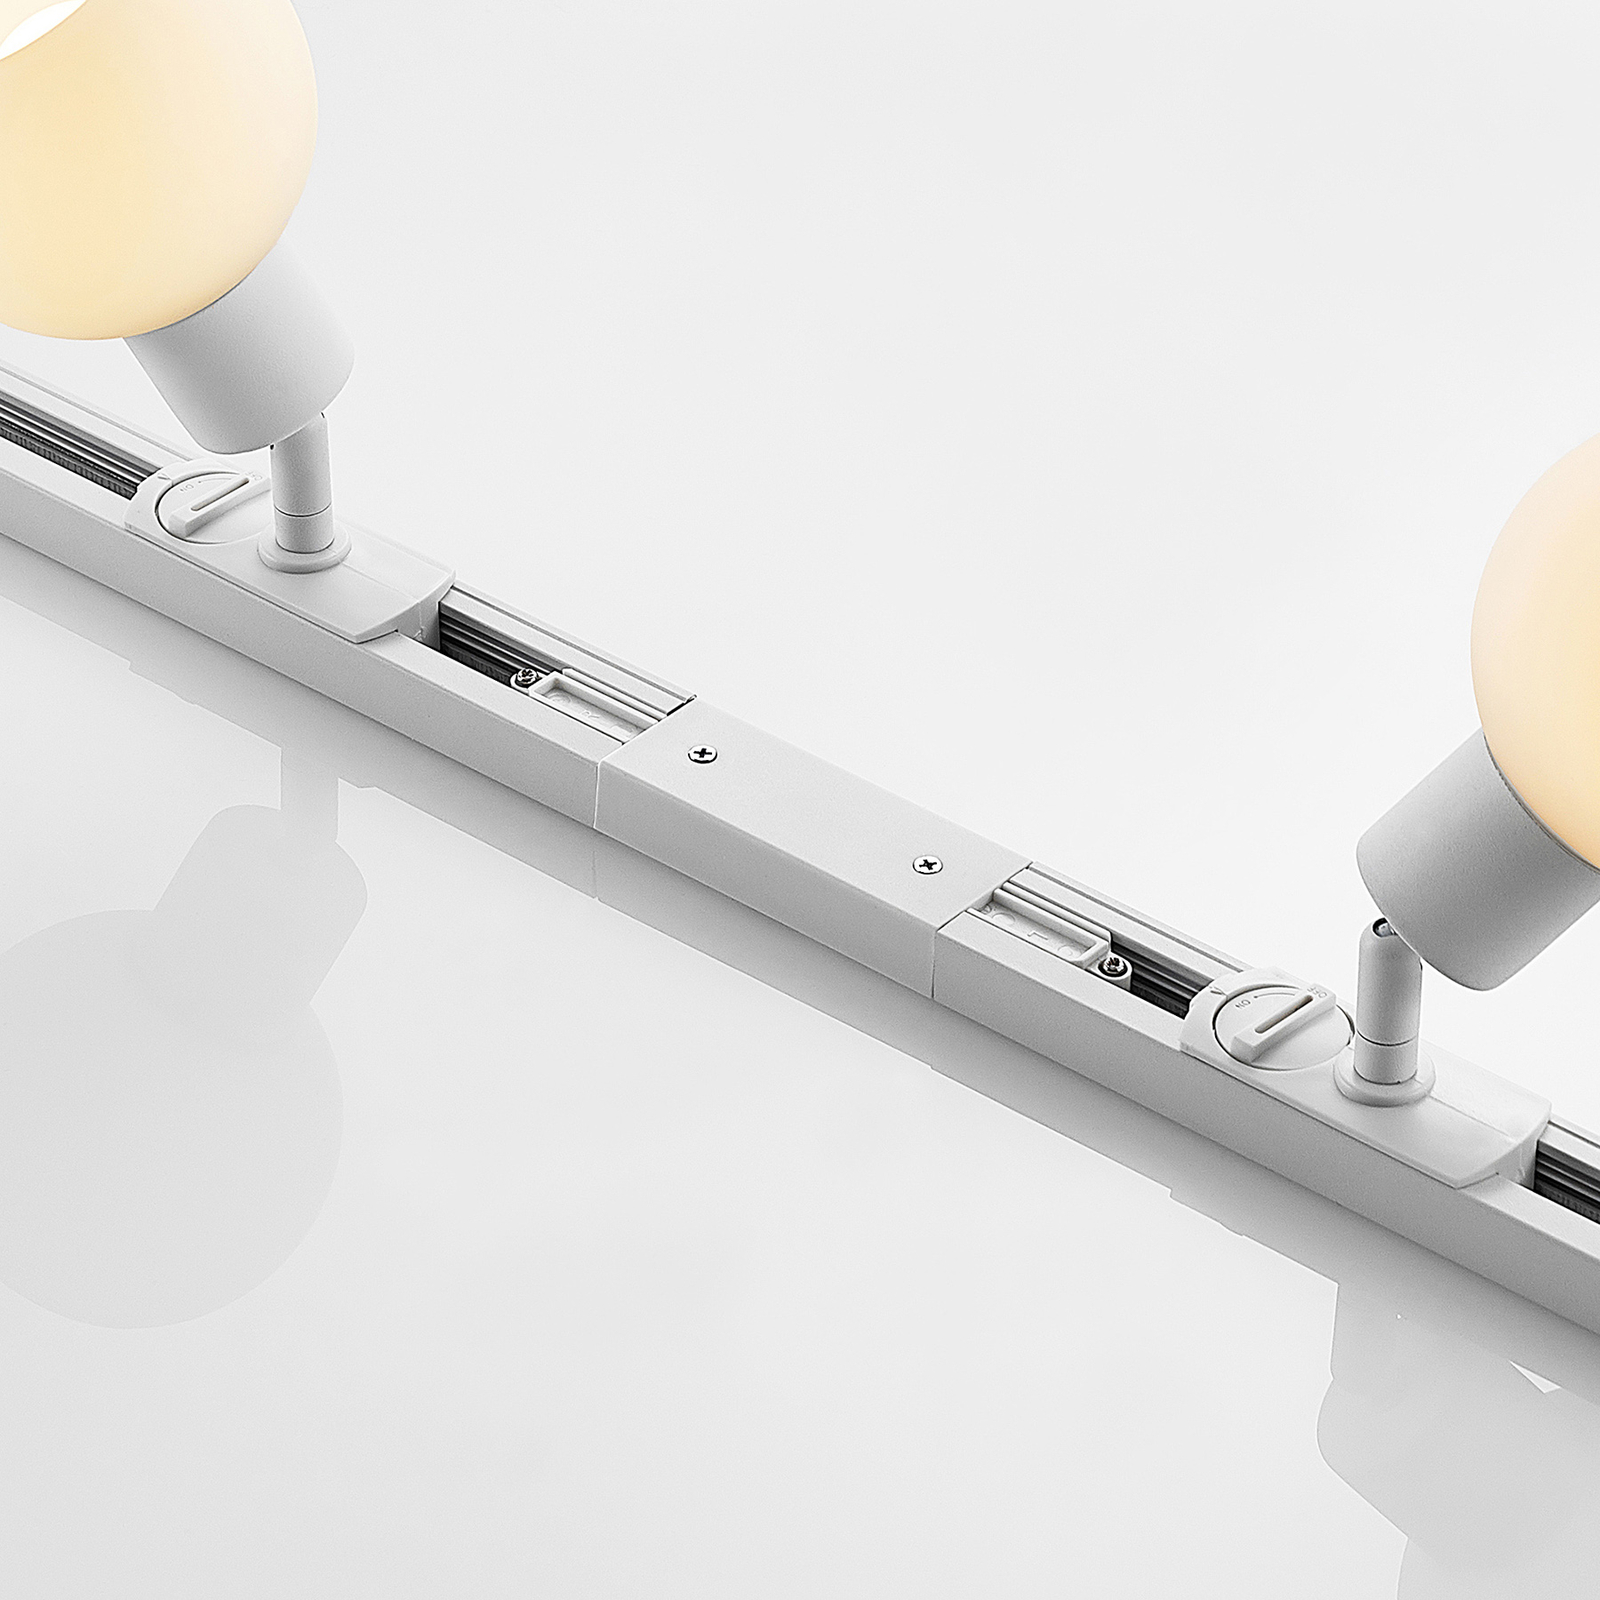 Lindby single-circuit track lighting system Linaro, E14, 4 x 10 W, white